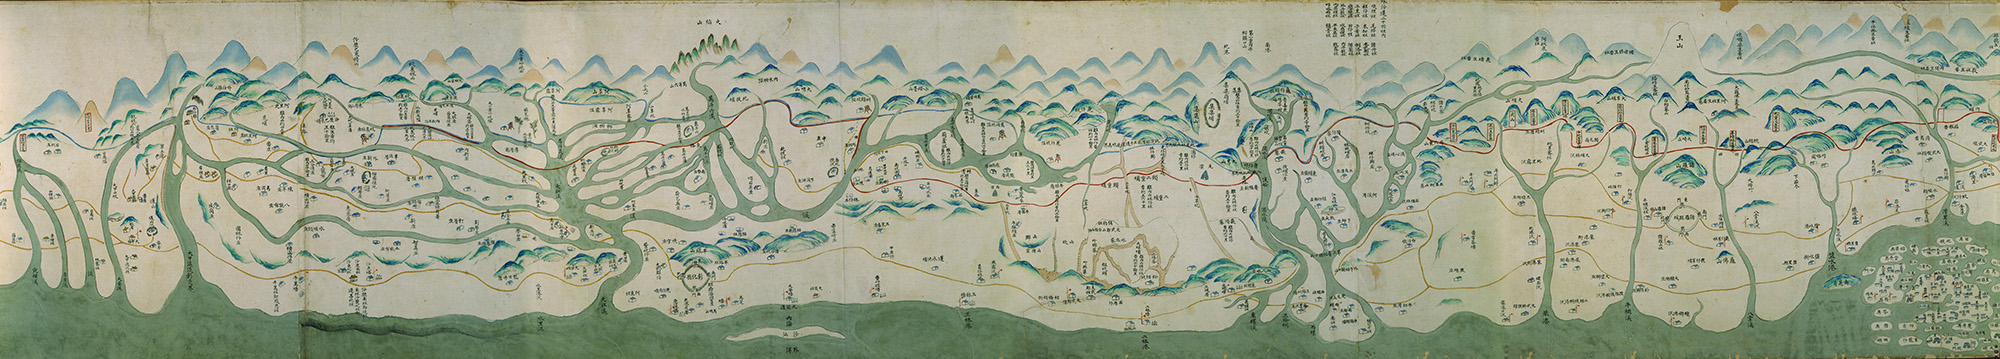 Map of Boundaries Dividing Han Chinese and Savages